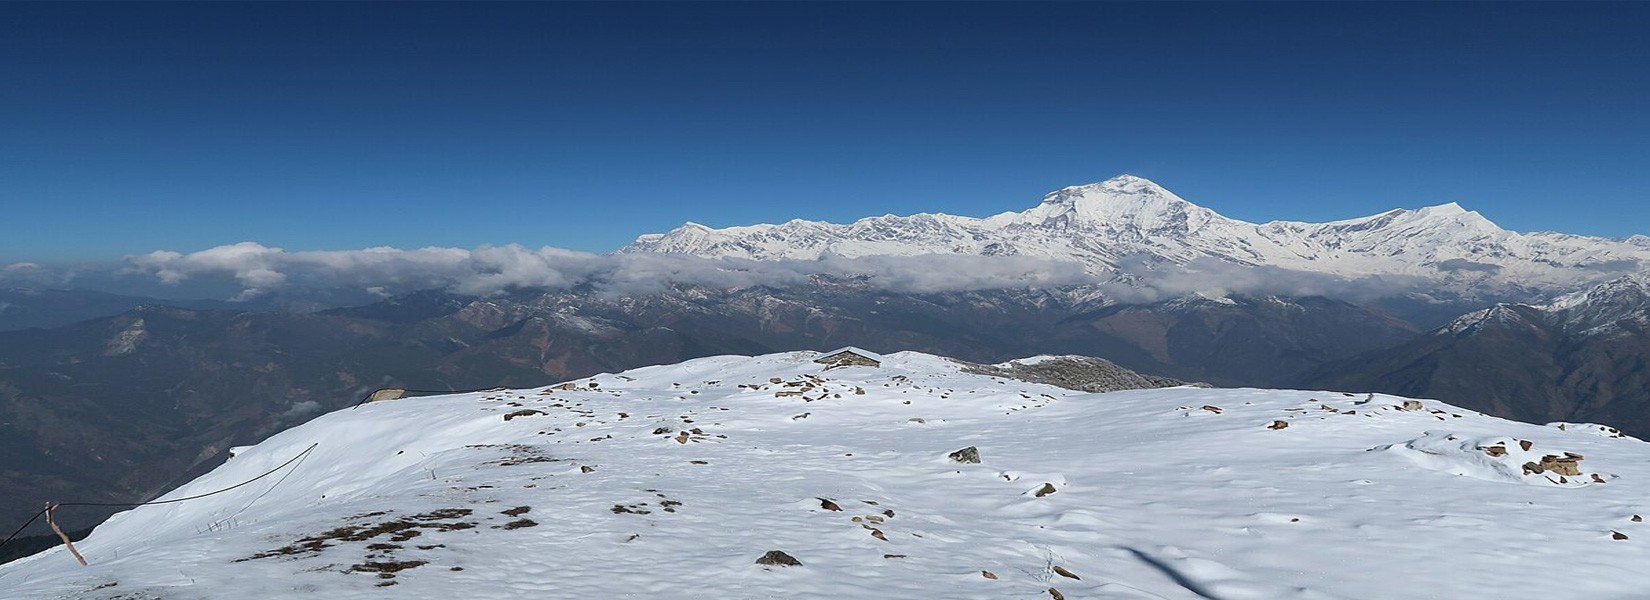 Khopra danda  Annapurna Trekking